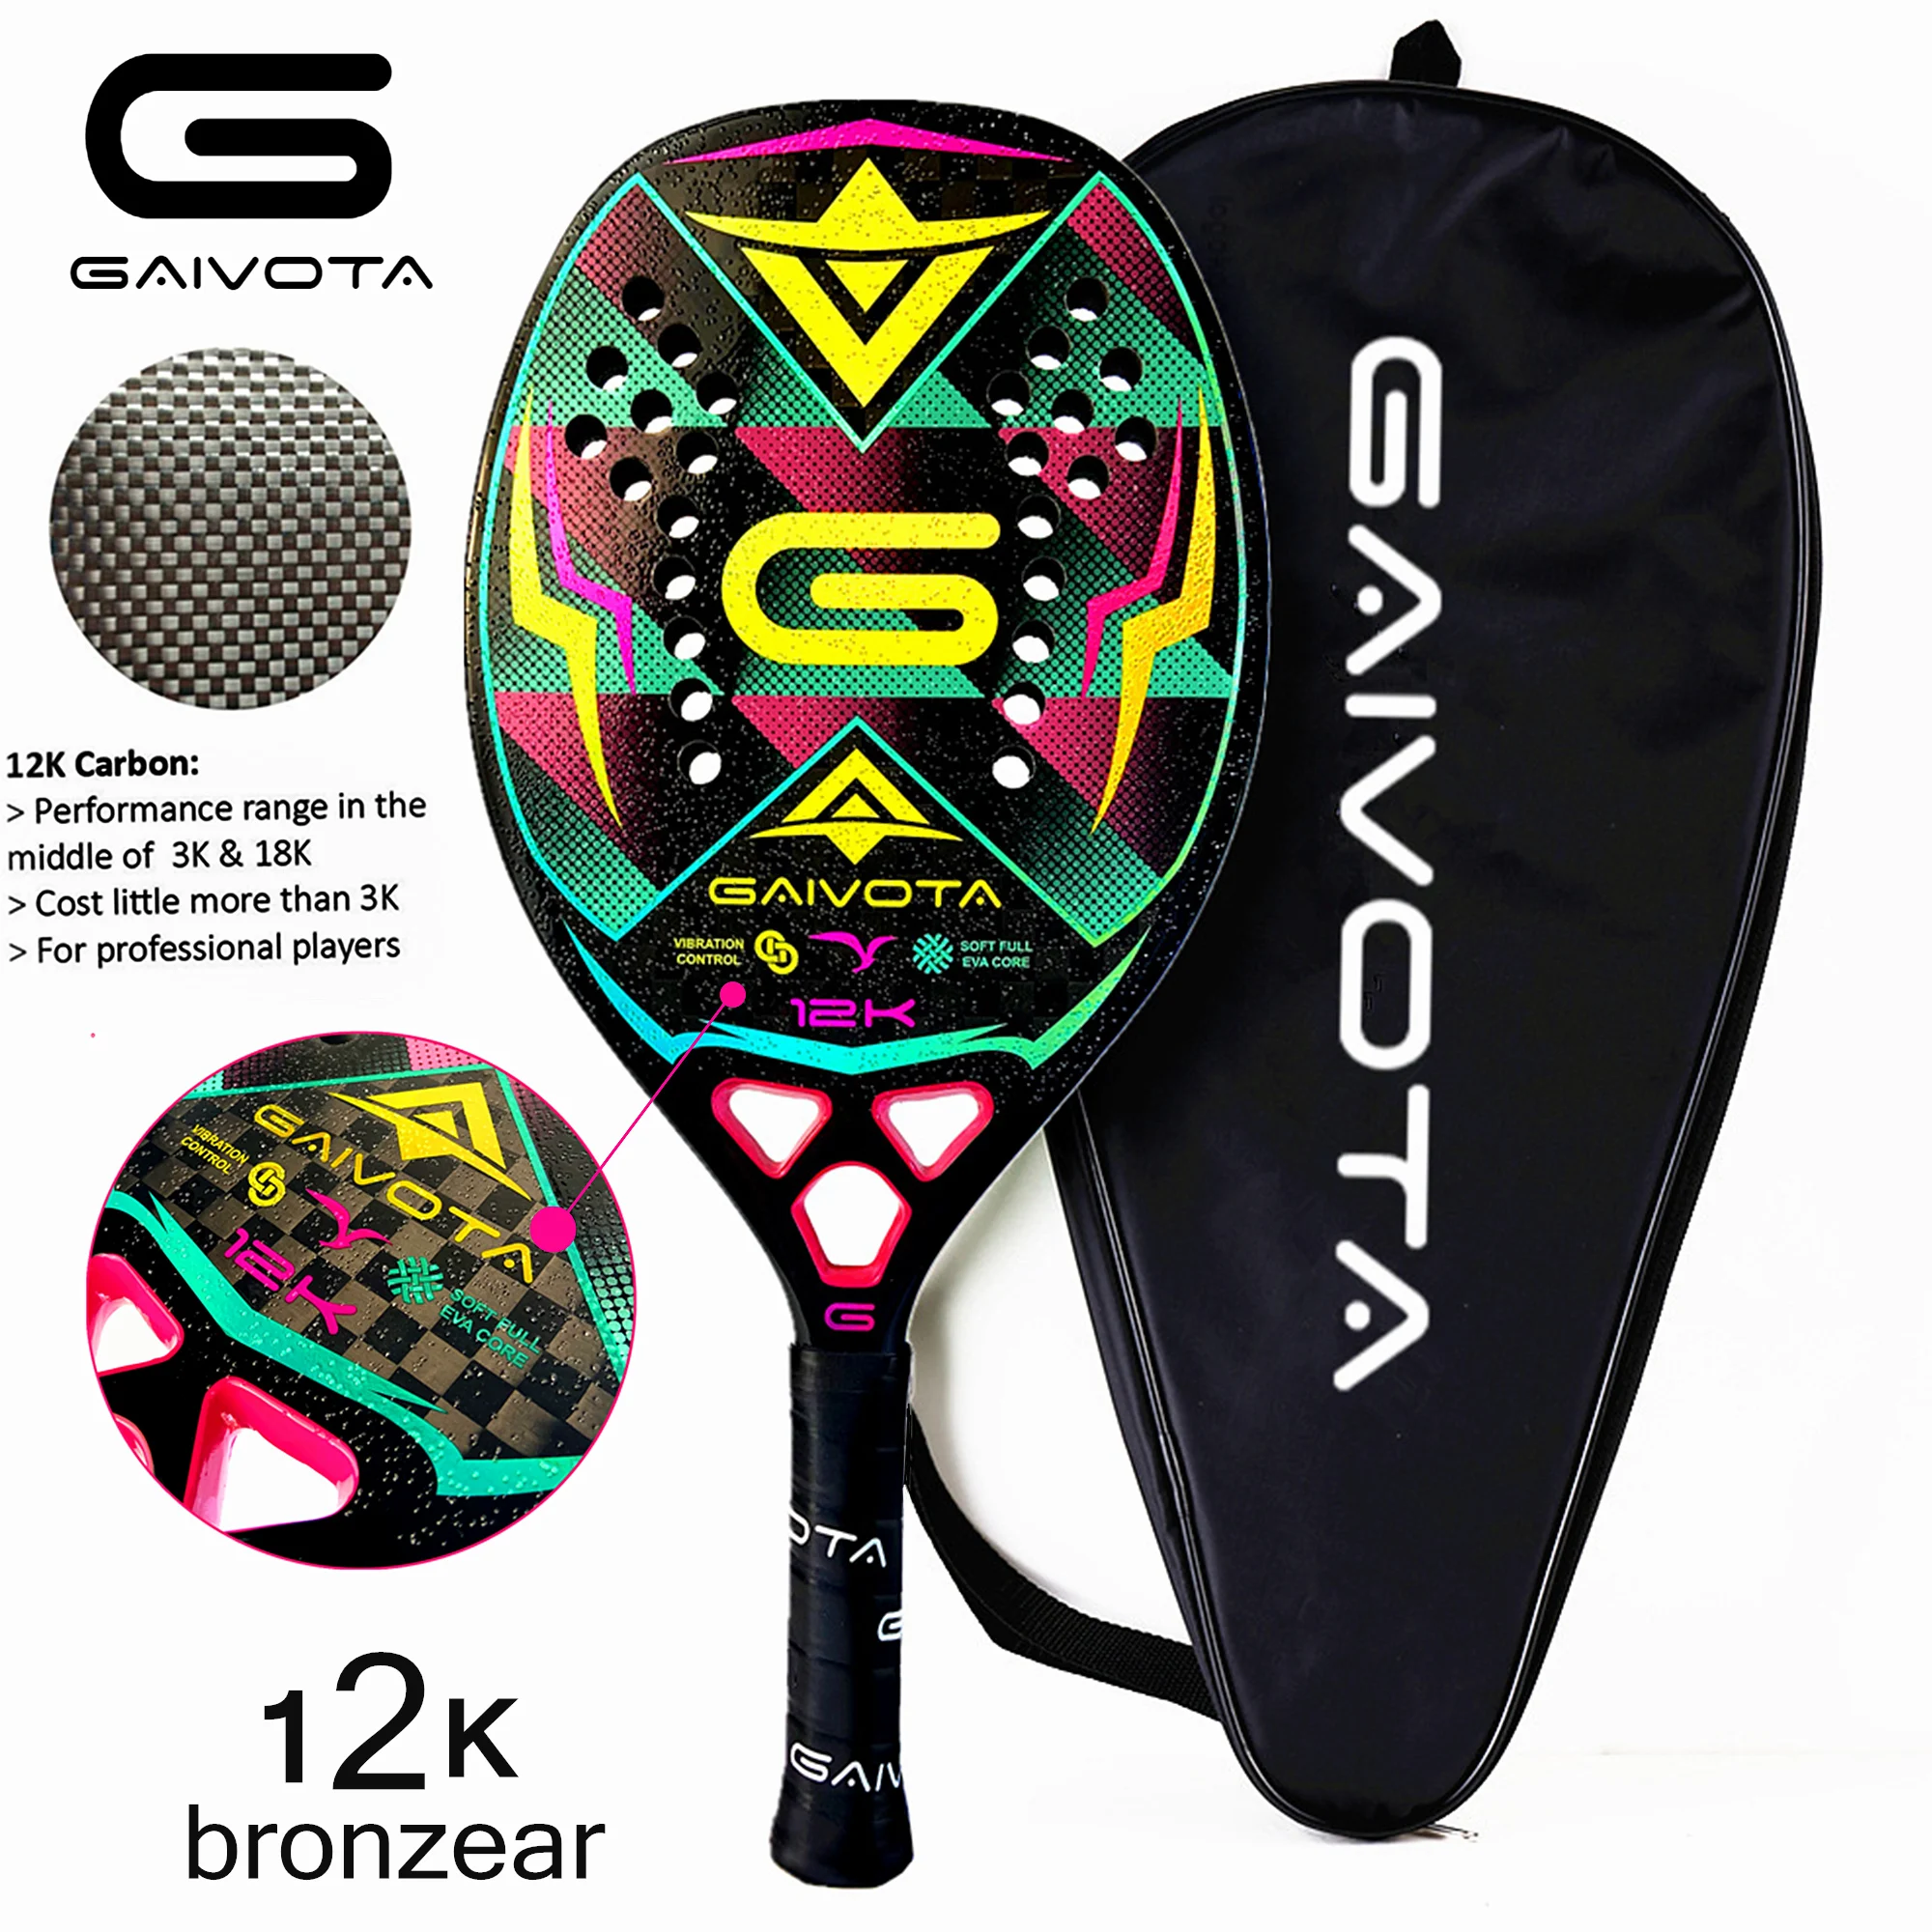 MINGHE 12K carbon fiber beach racket limited edition high-end racket with laser film 3D true color holographic technology-1pcs